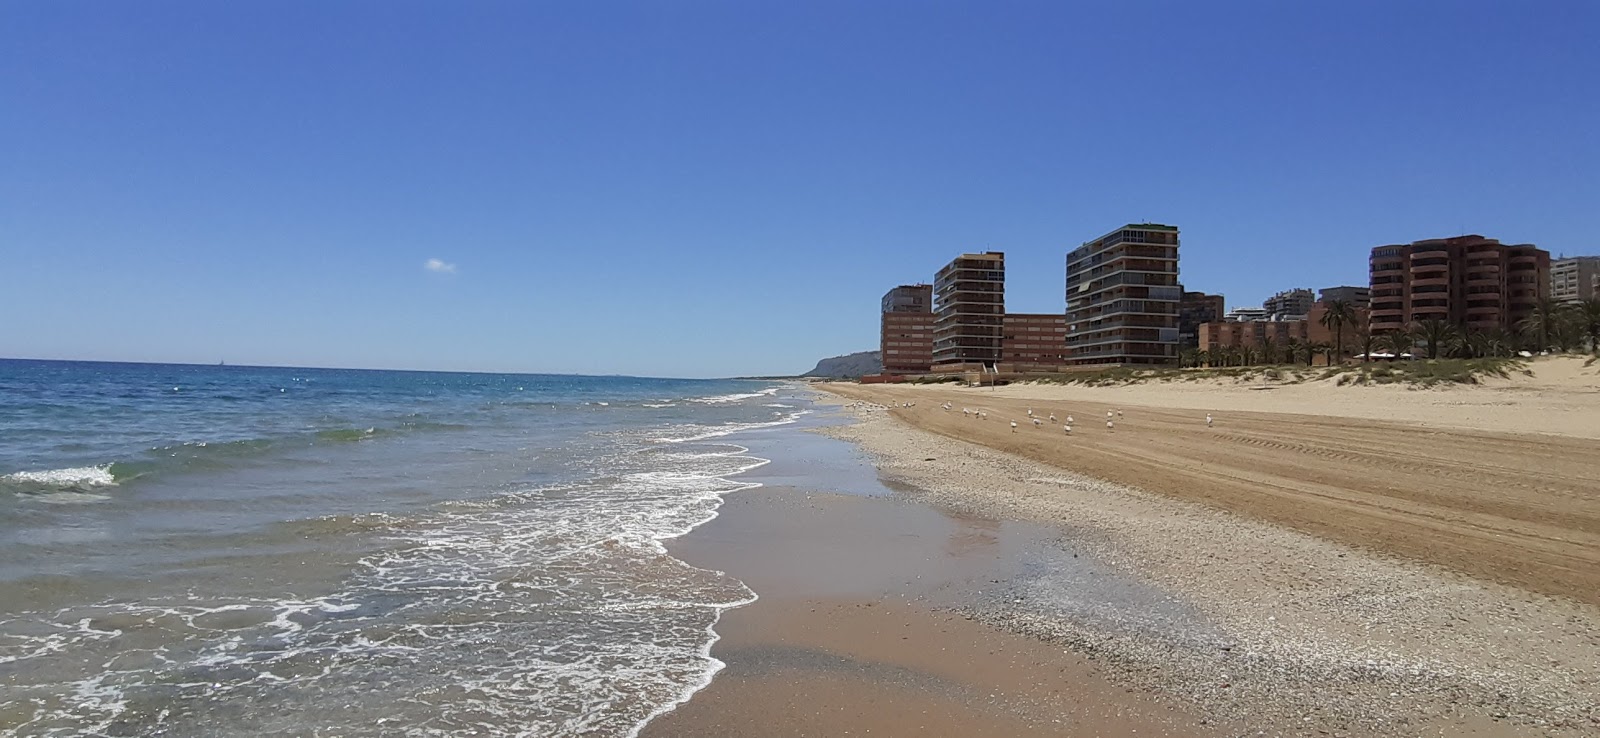 Valokuva los Arenales del Solista. pinnalla ruskea hiekka:n kanssa